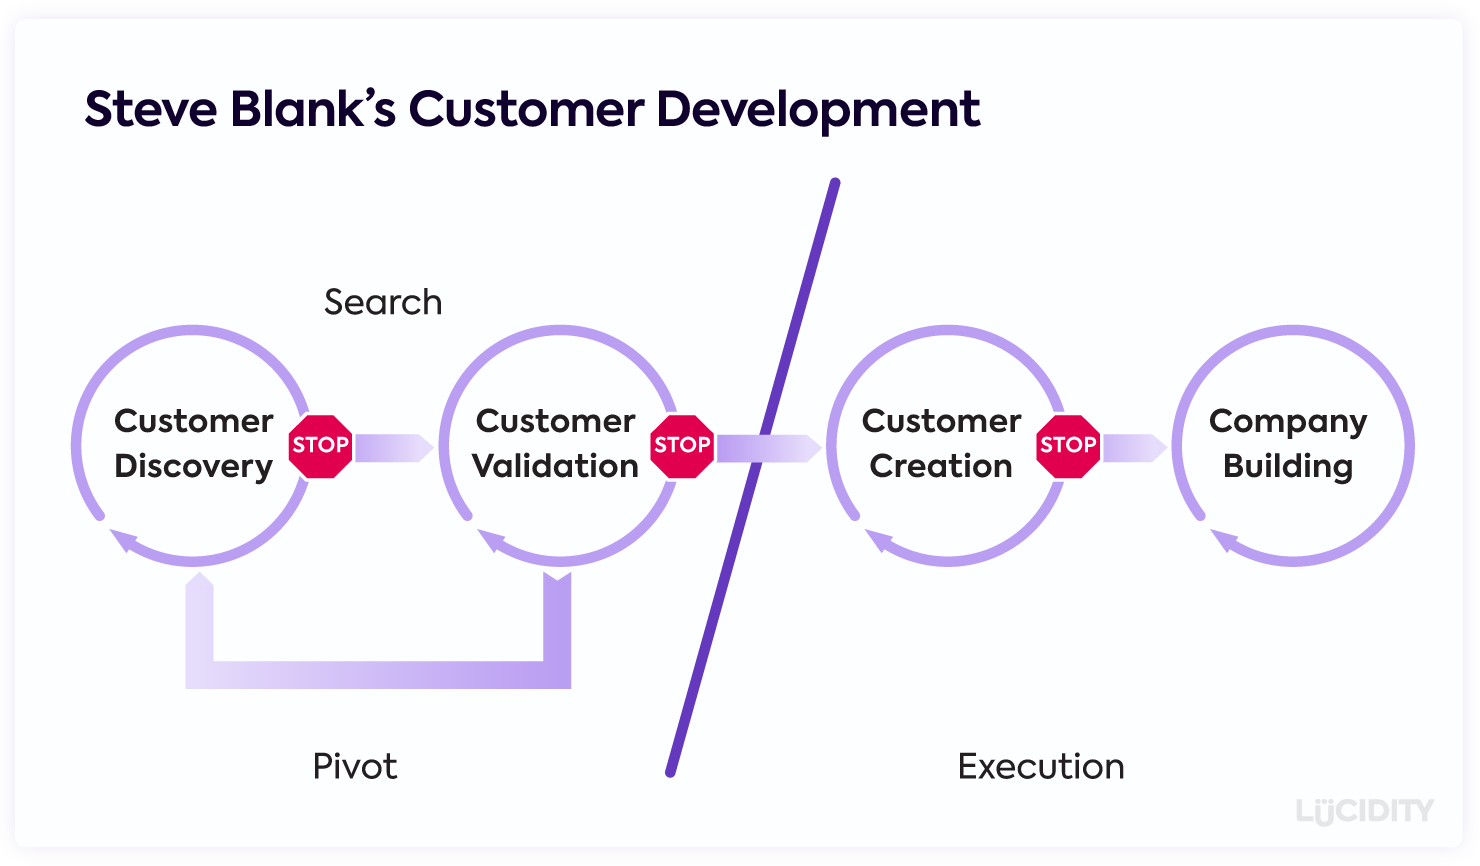 Steve Blank's Customer Development Process as part of Lean Innovation